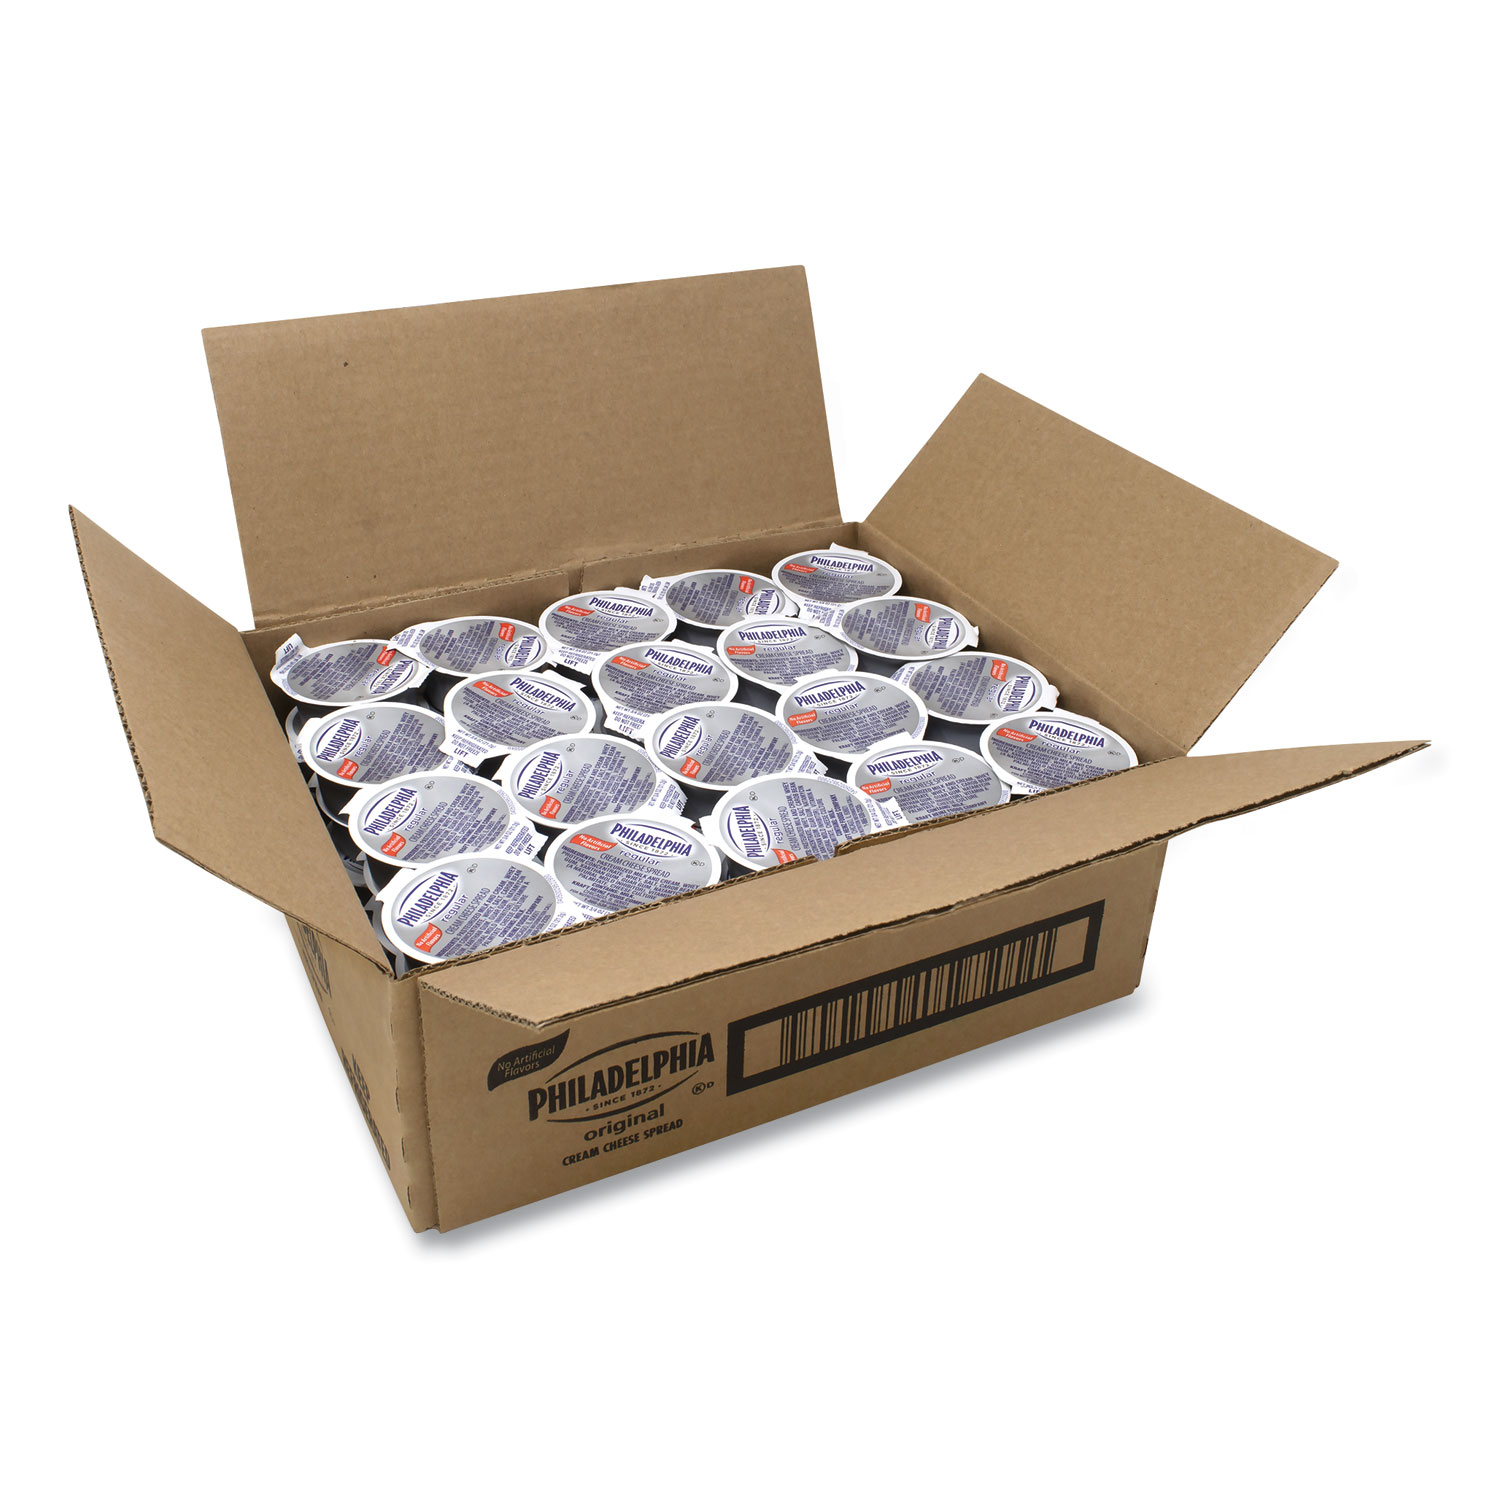  Kraft 610898 Philadelphia Cream Cheese, Original, 0.75 oz Cup, 50/Box, Free Delivery in 1-4 Business Days (GRR90200451) 